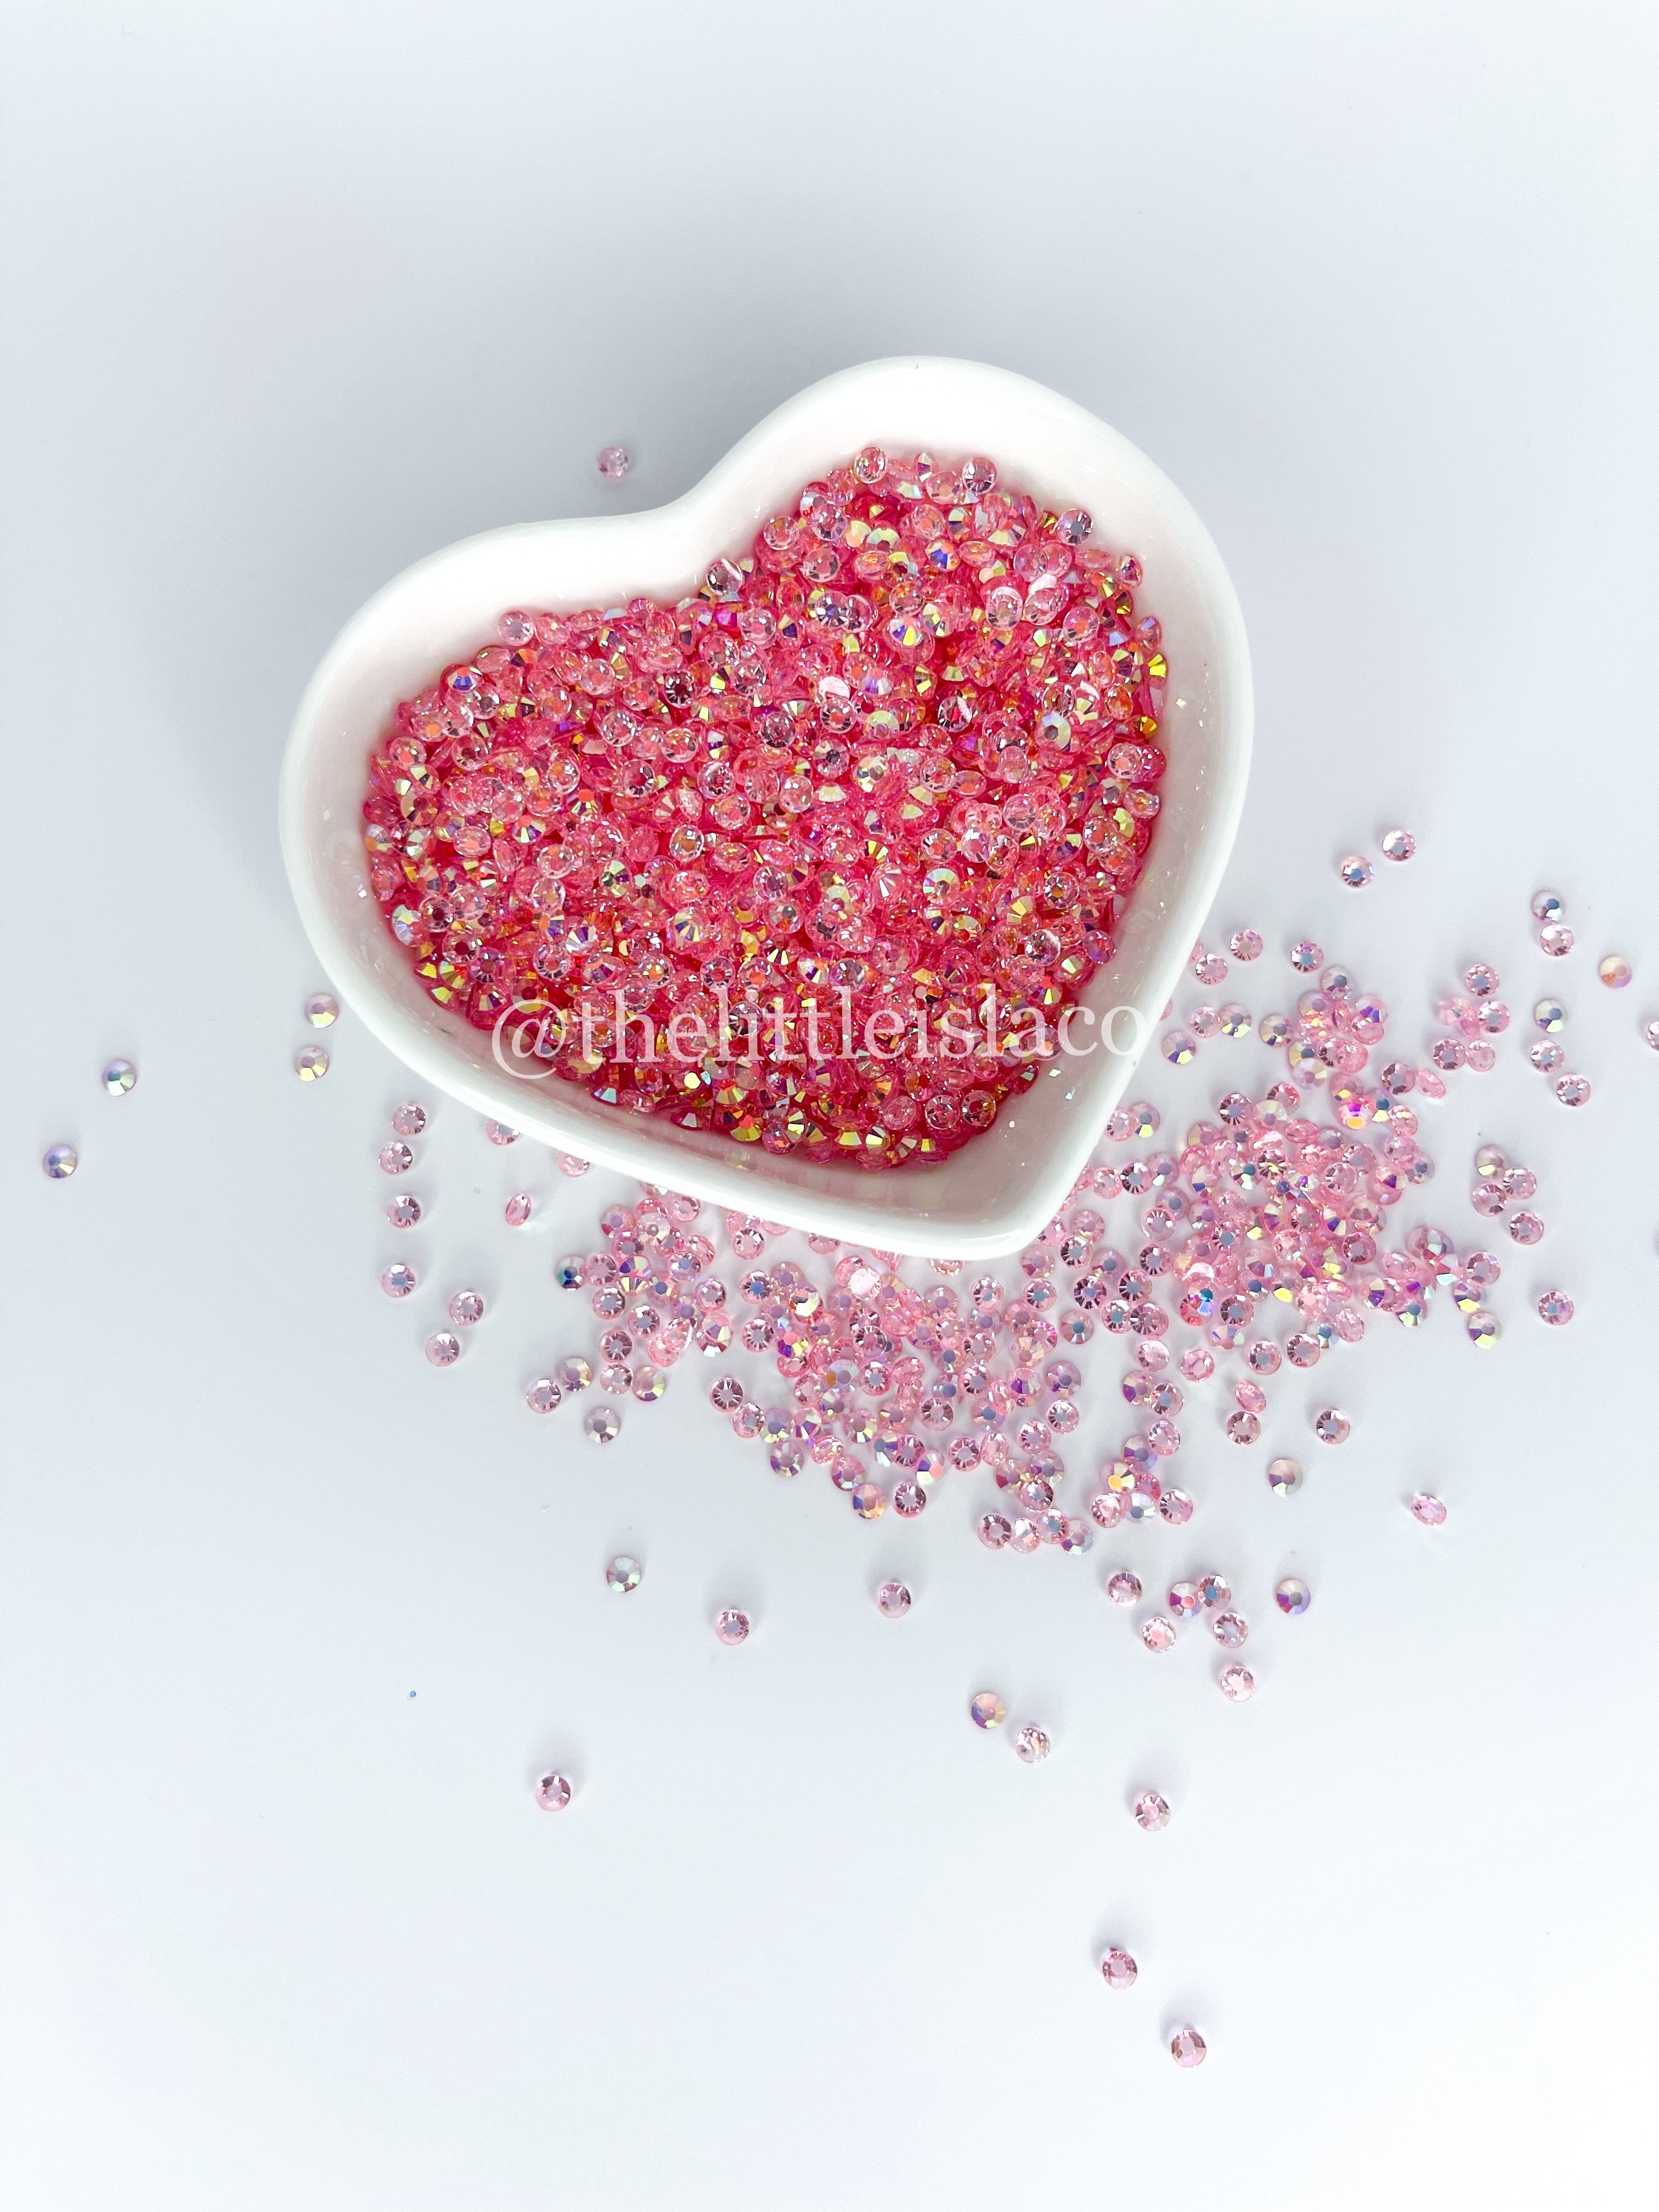 KraftGenius Allstarco 6mm Pink LQ03 Flower Self Adhesive Acrylic Rhinestones PLA